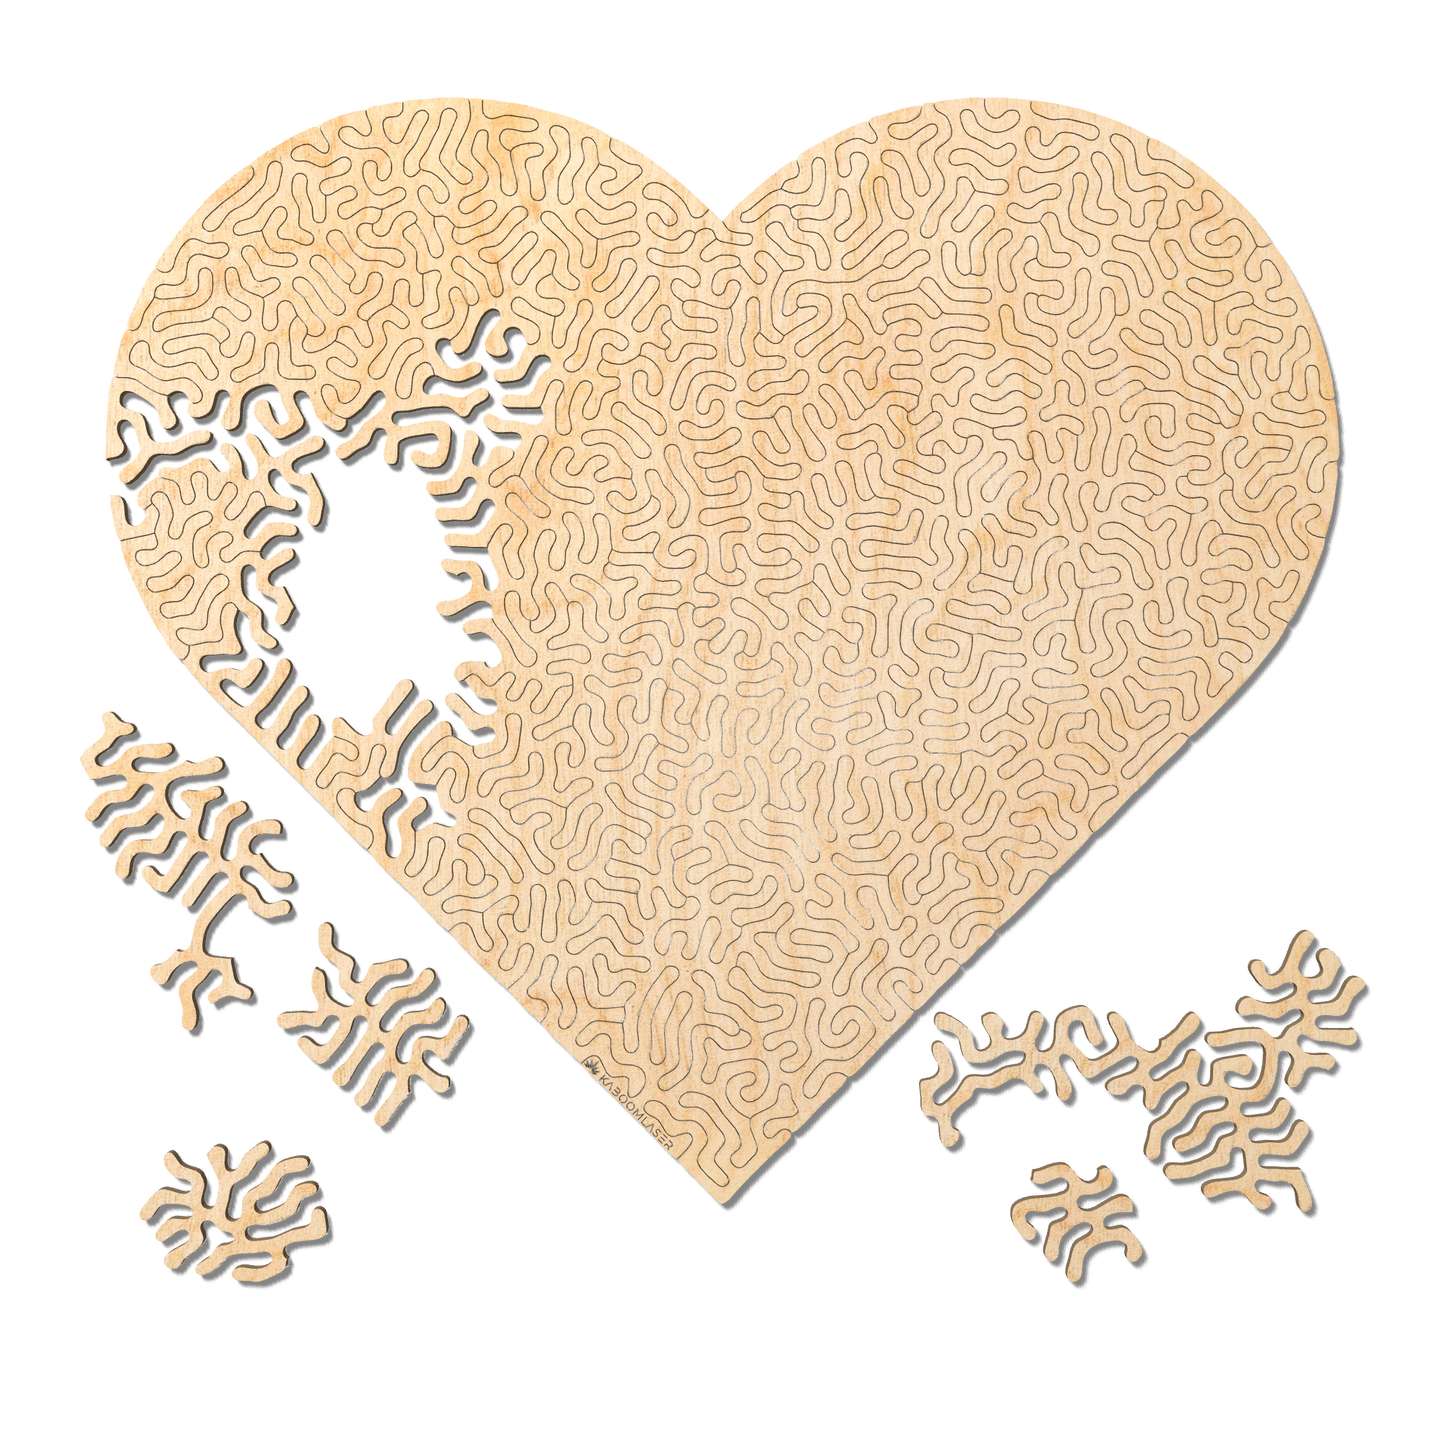 Broken Heart XL | Wooden Puzzle | Entropy series